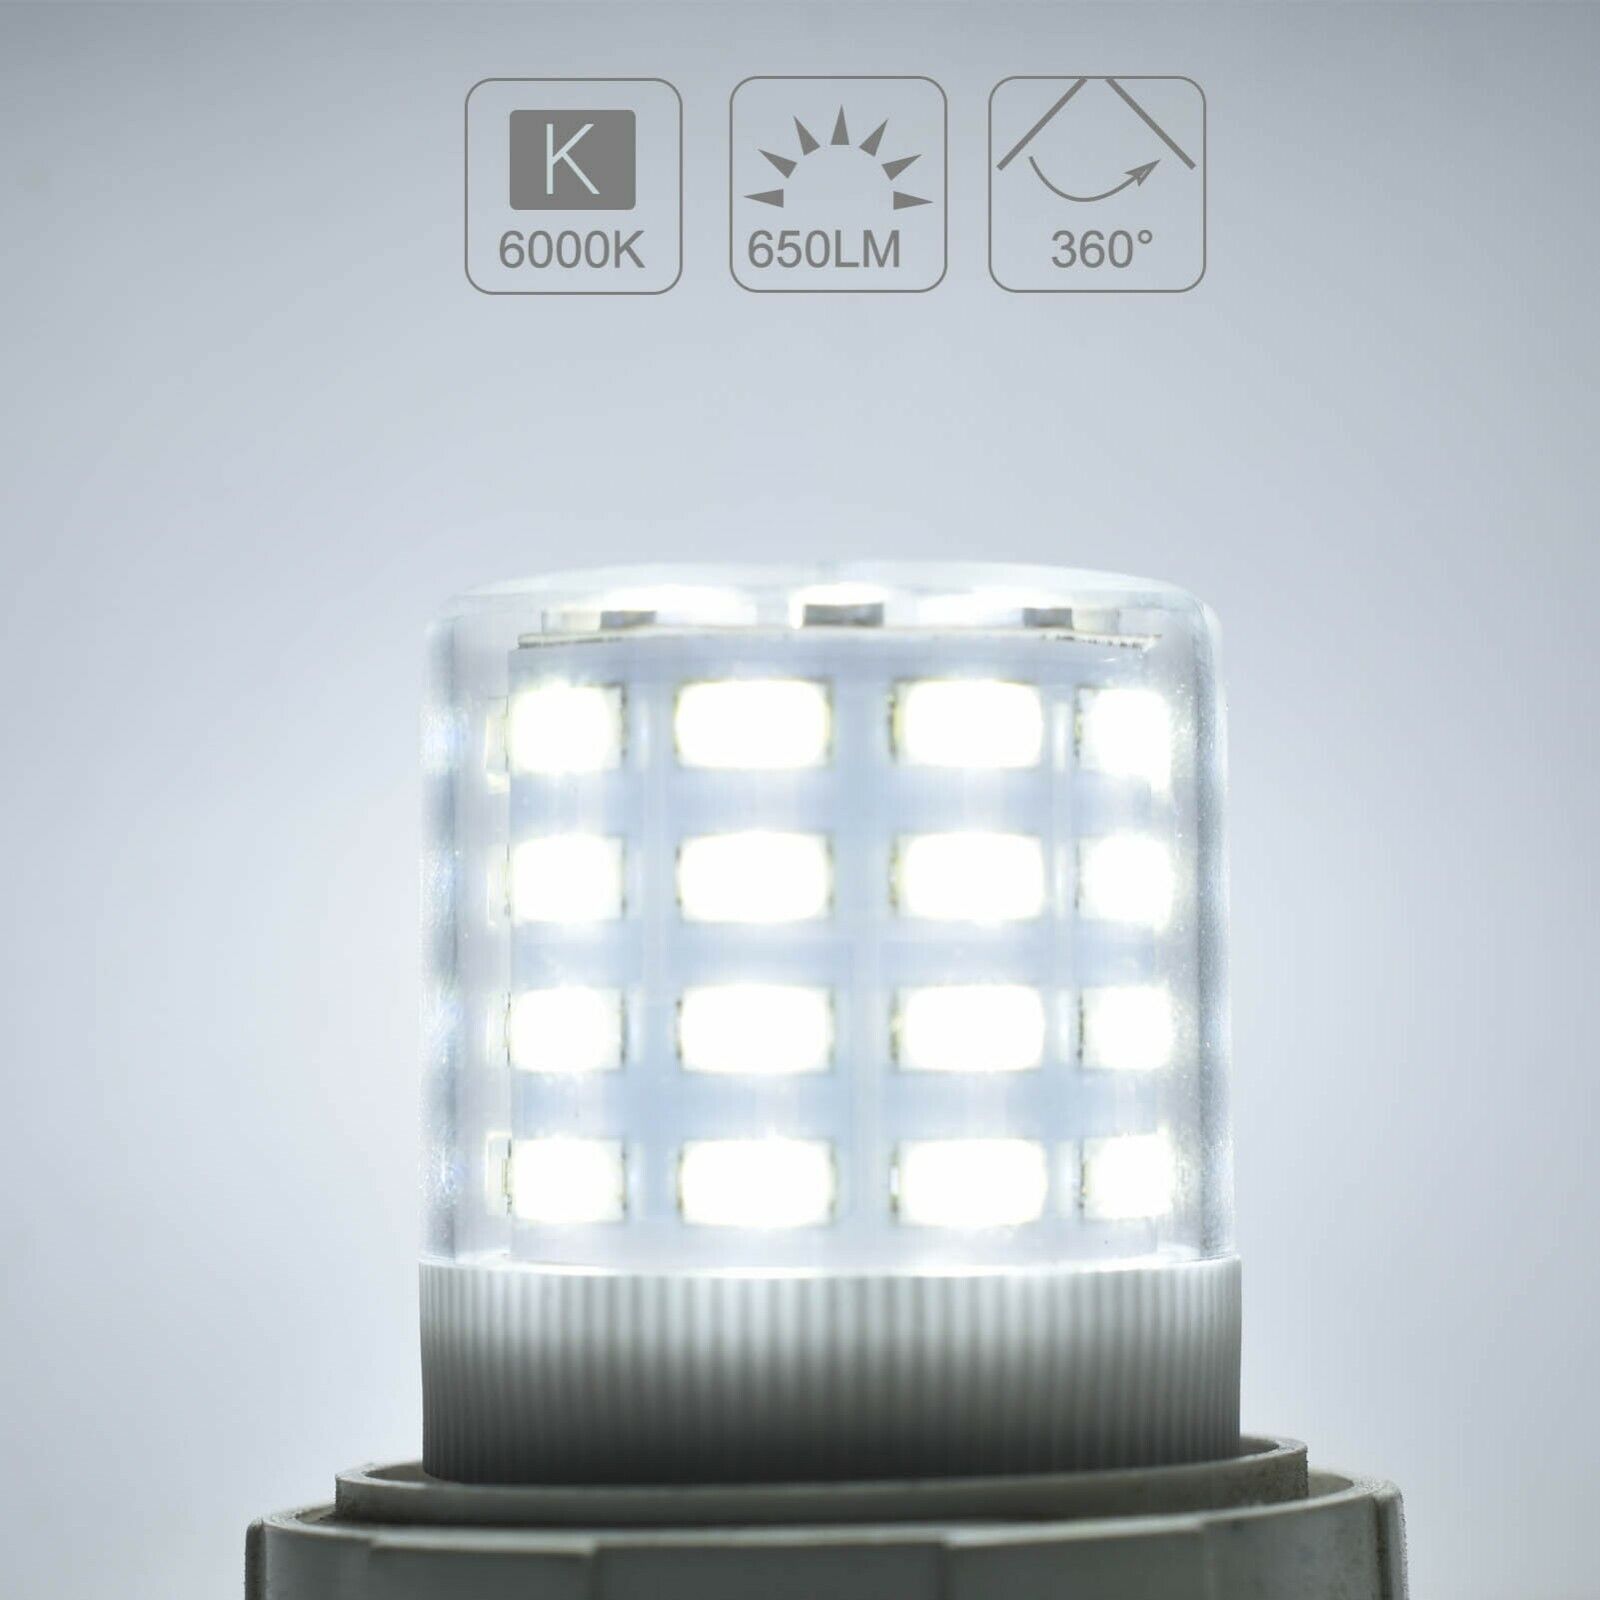 2pcs E26 E27 LED Bulb 110~265V 6W 48-5730 Refrigerator light Home Lamp H